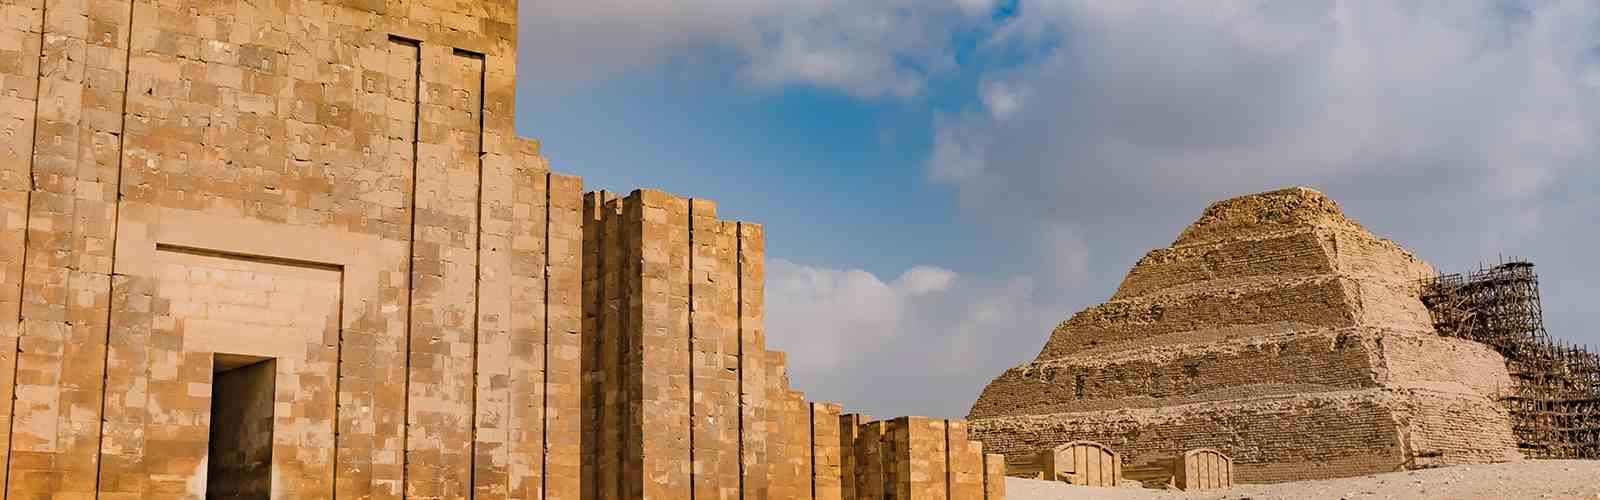 Pirâmide Sakkara no Egito